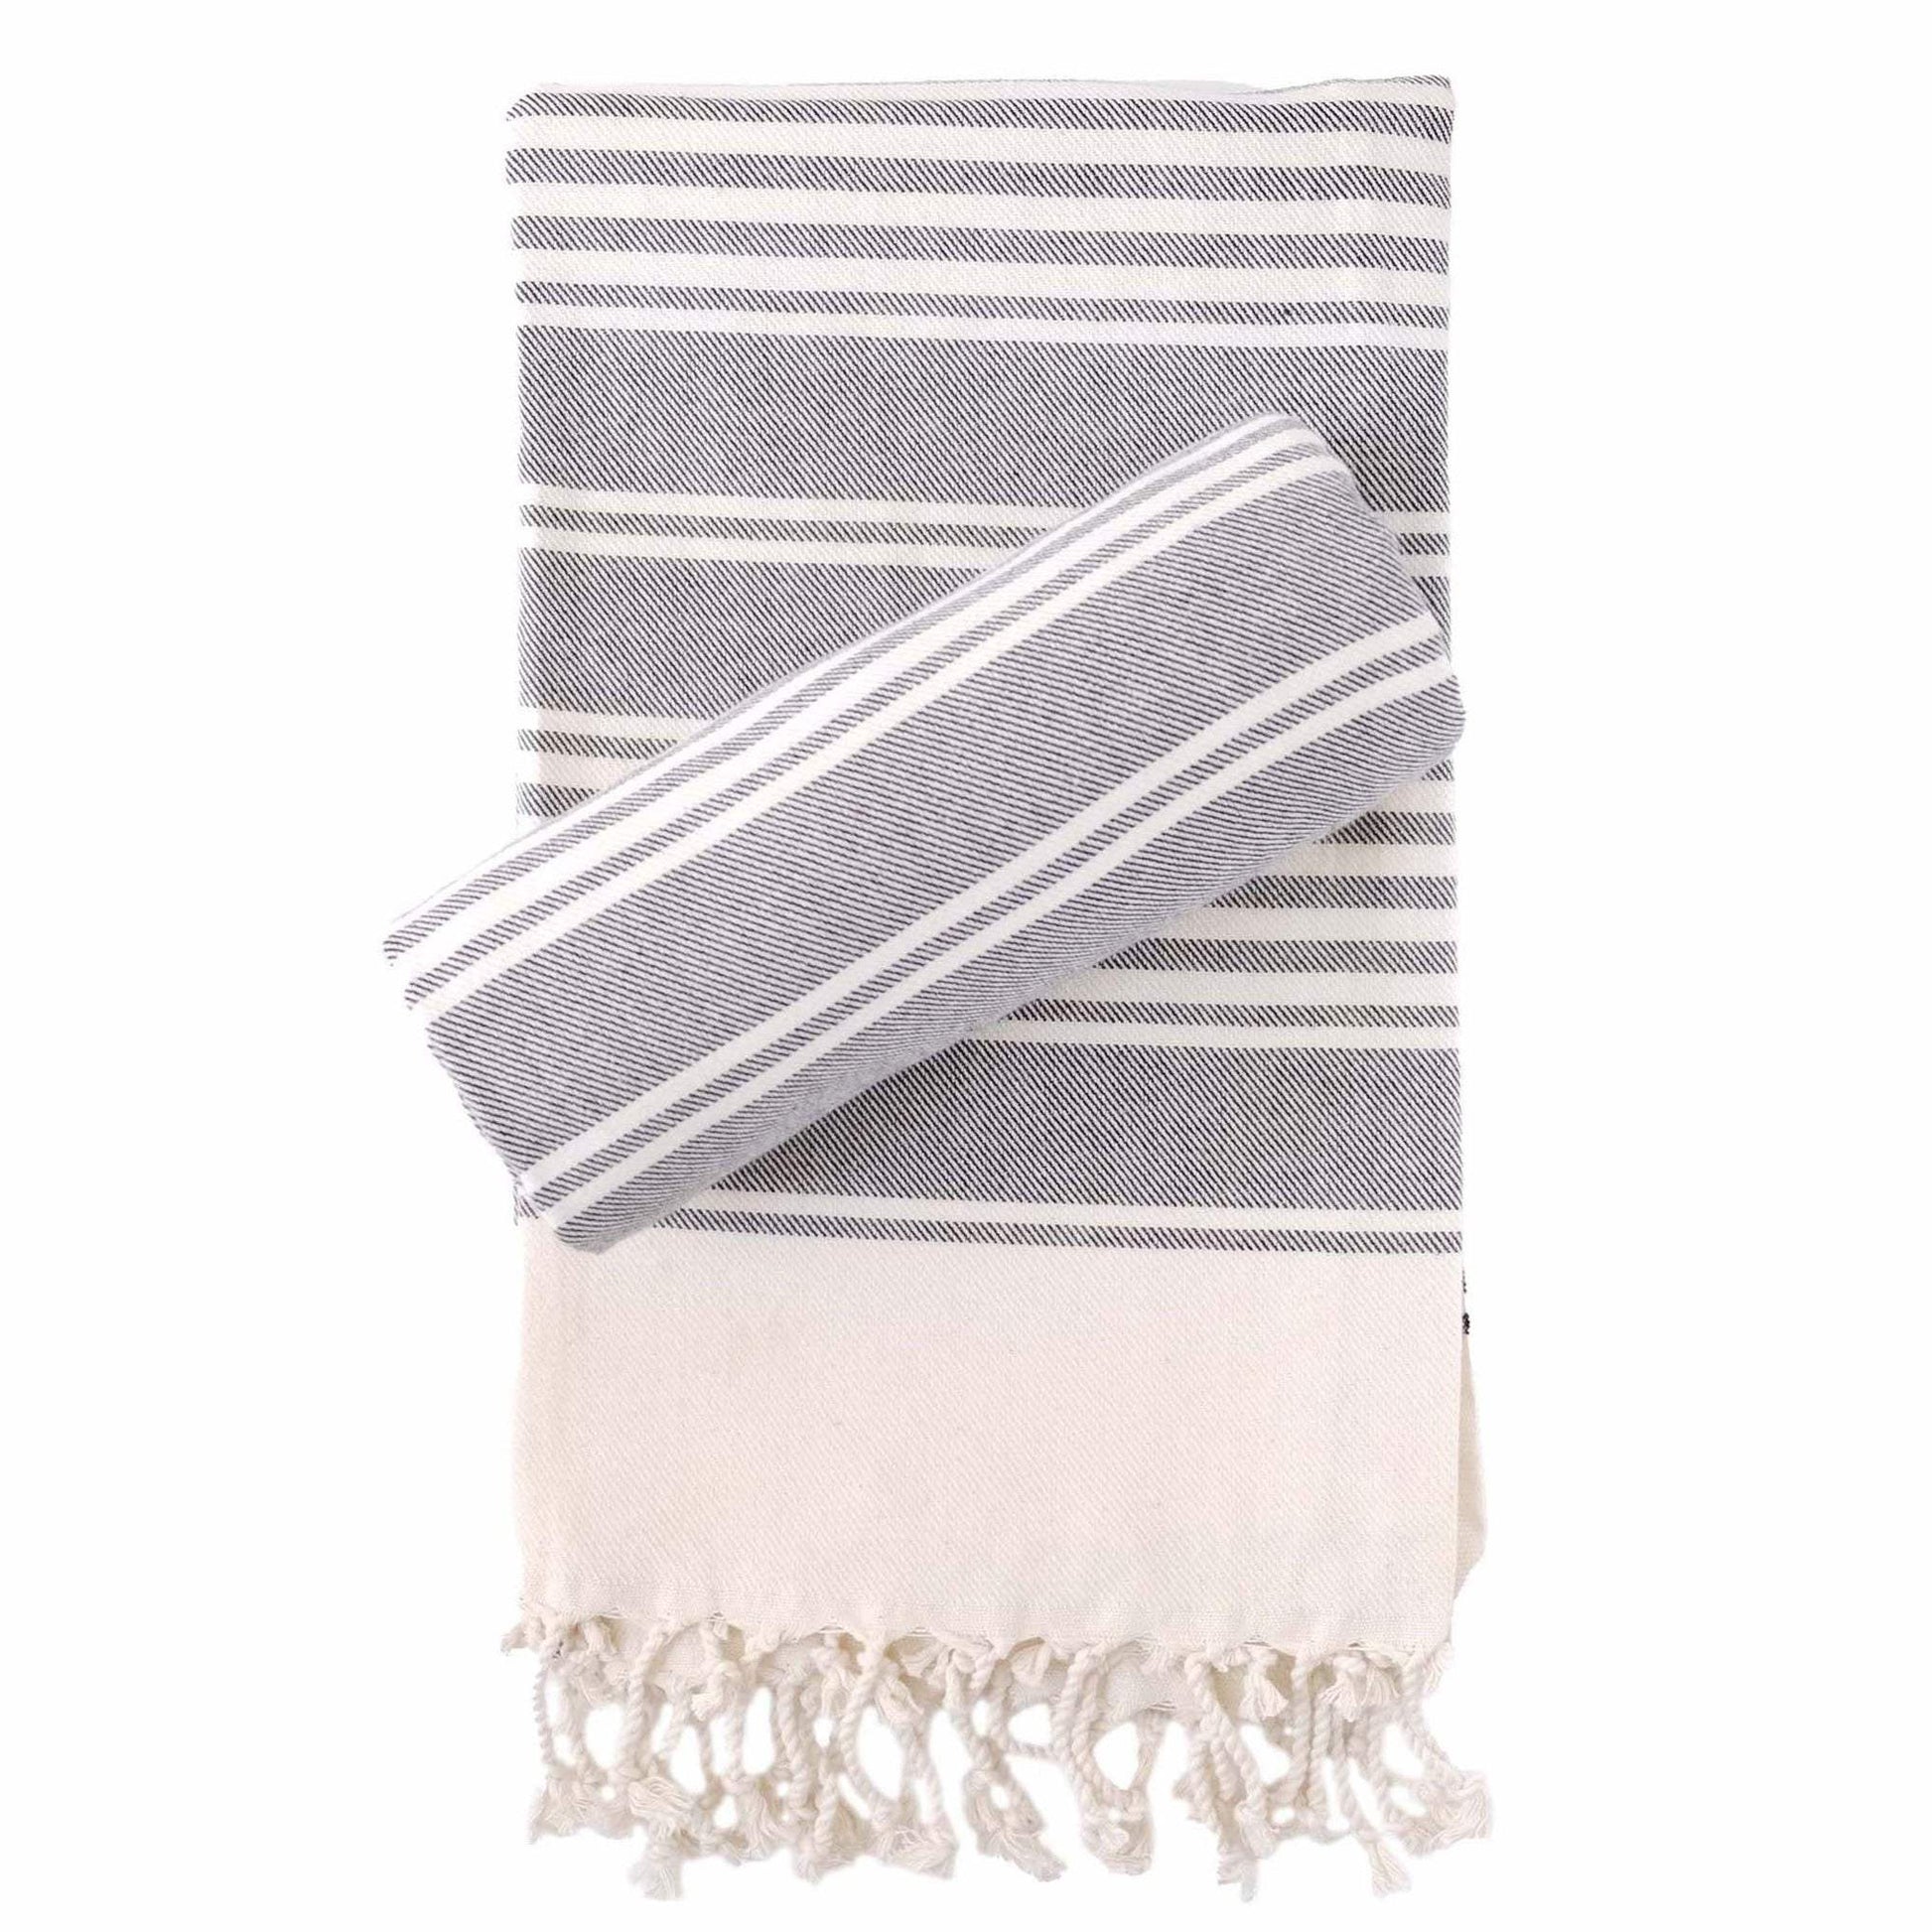 black sand peştemal turkish towel 100% cotton - sende self-care essentials